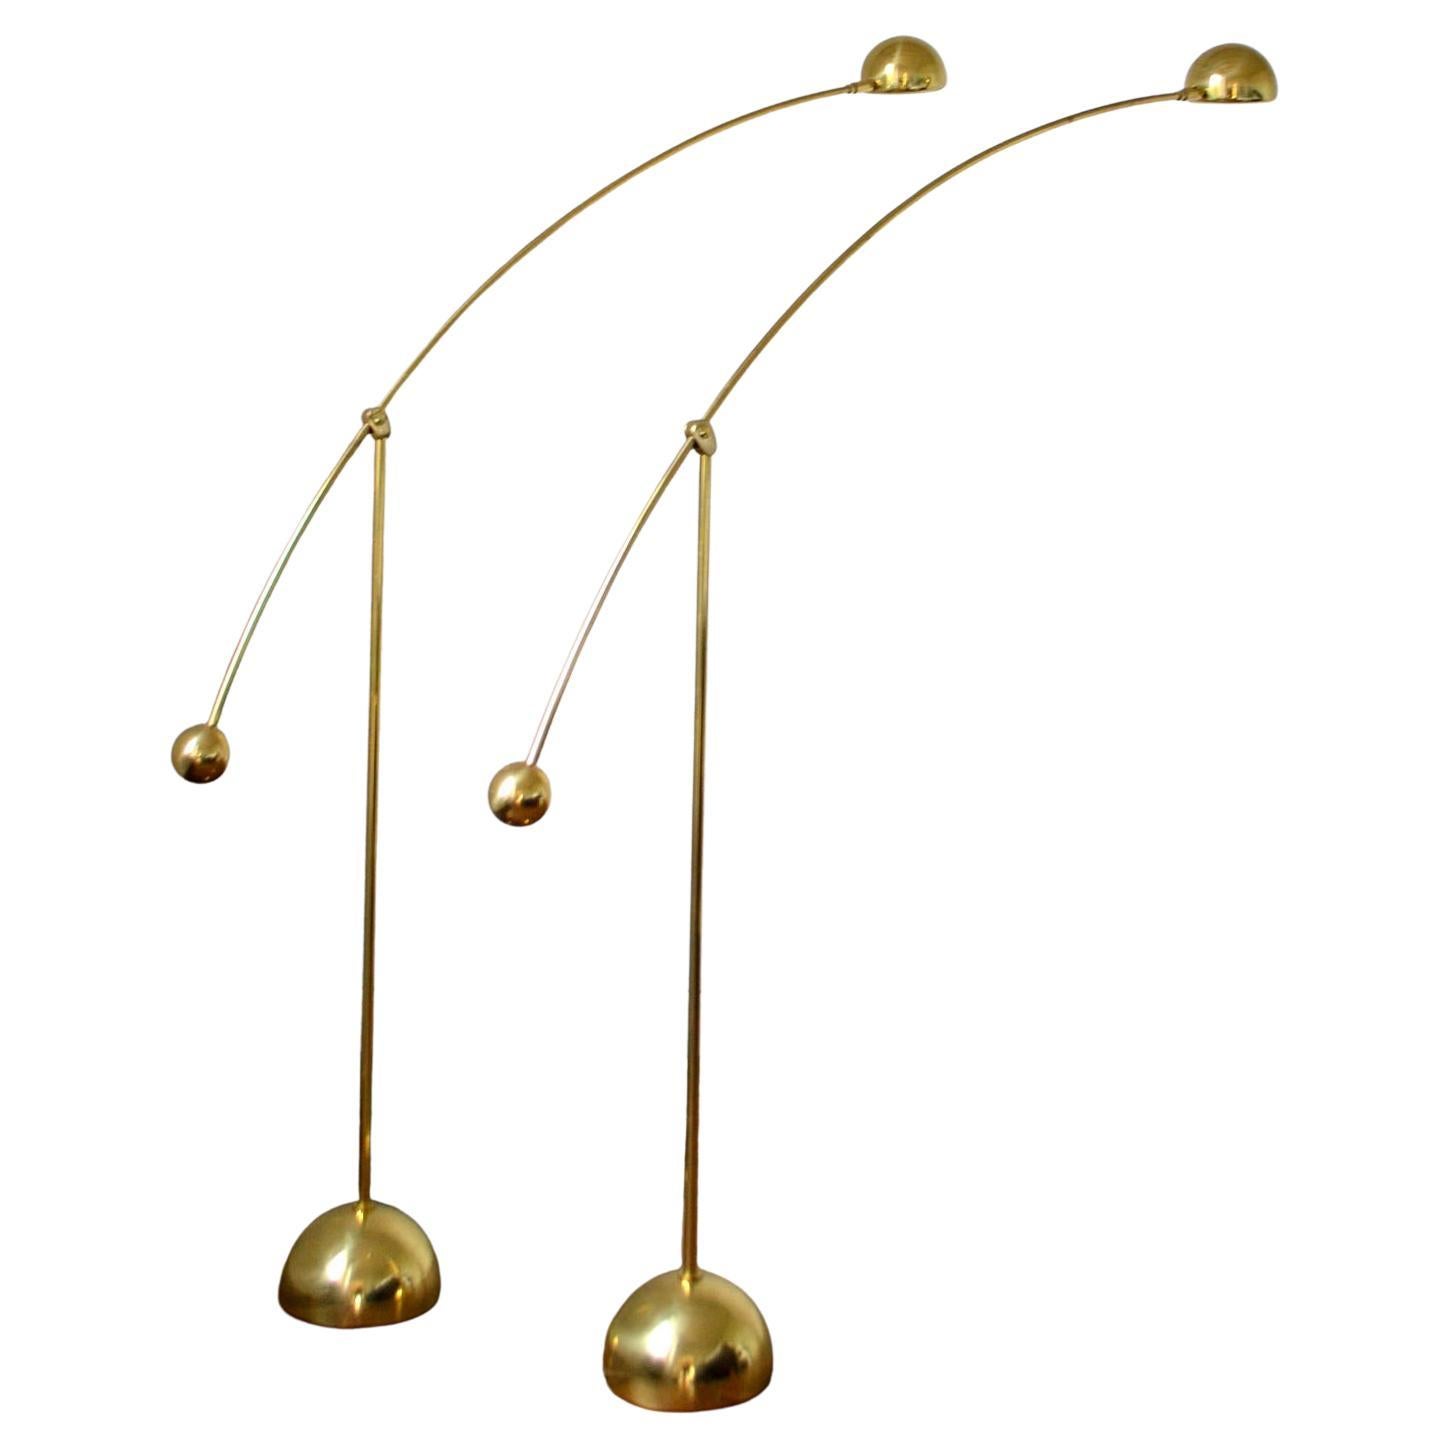 Pair of Adjustable Minimal Brass Bowed Floor Lamps